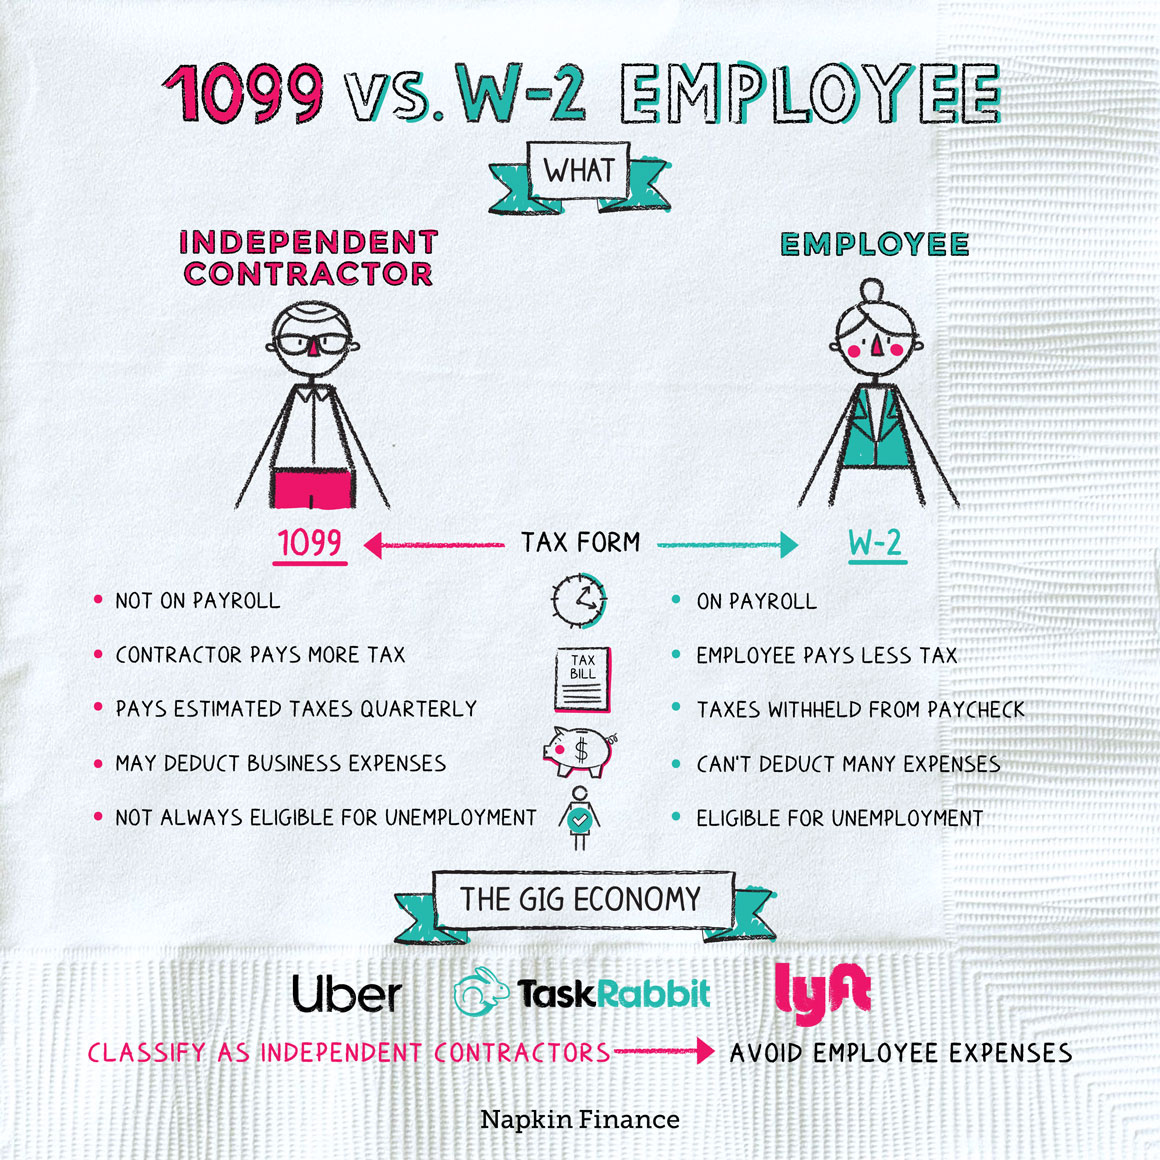 What Is A 1099 Vs W-2 Employee? – Napkin Finance with regard to W2 Form 1099